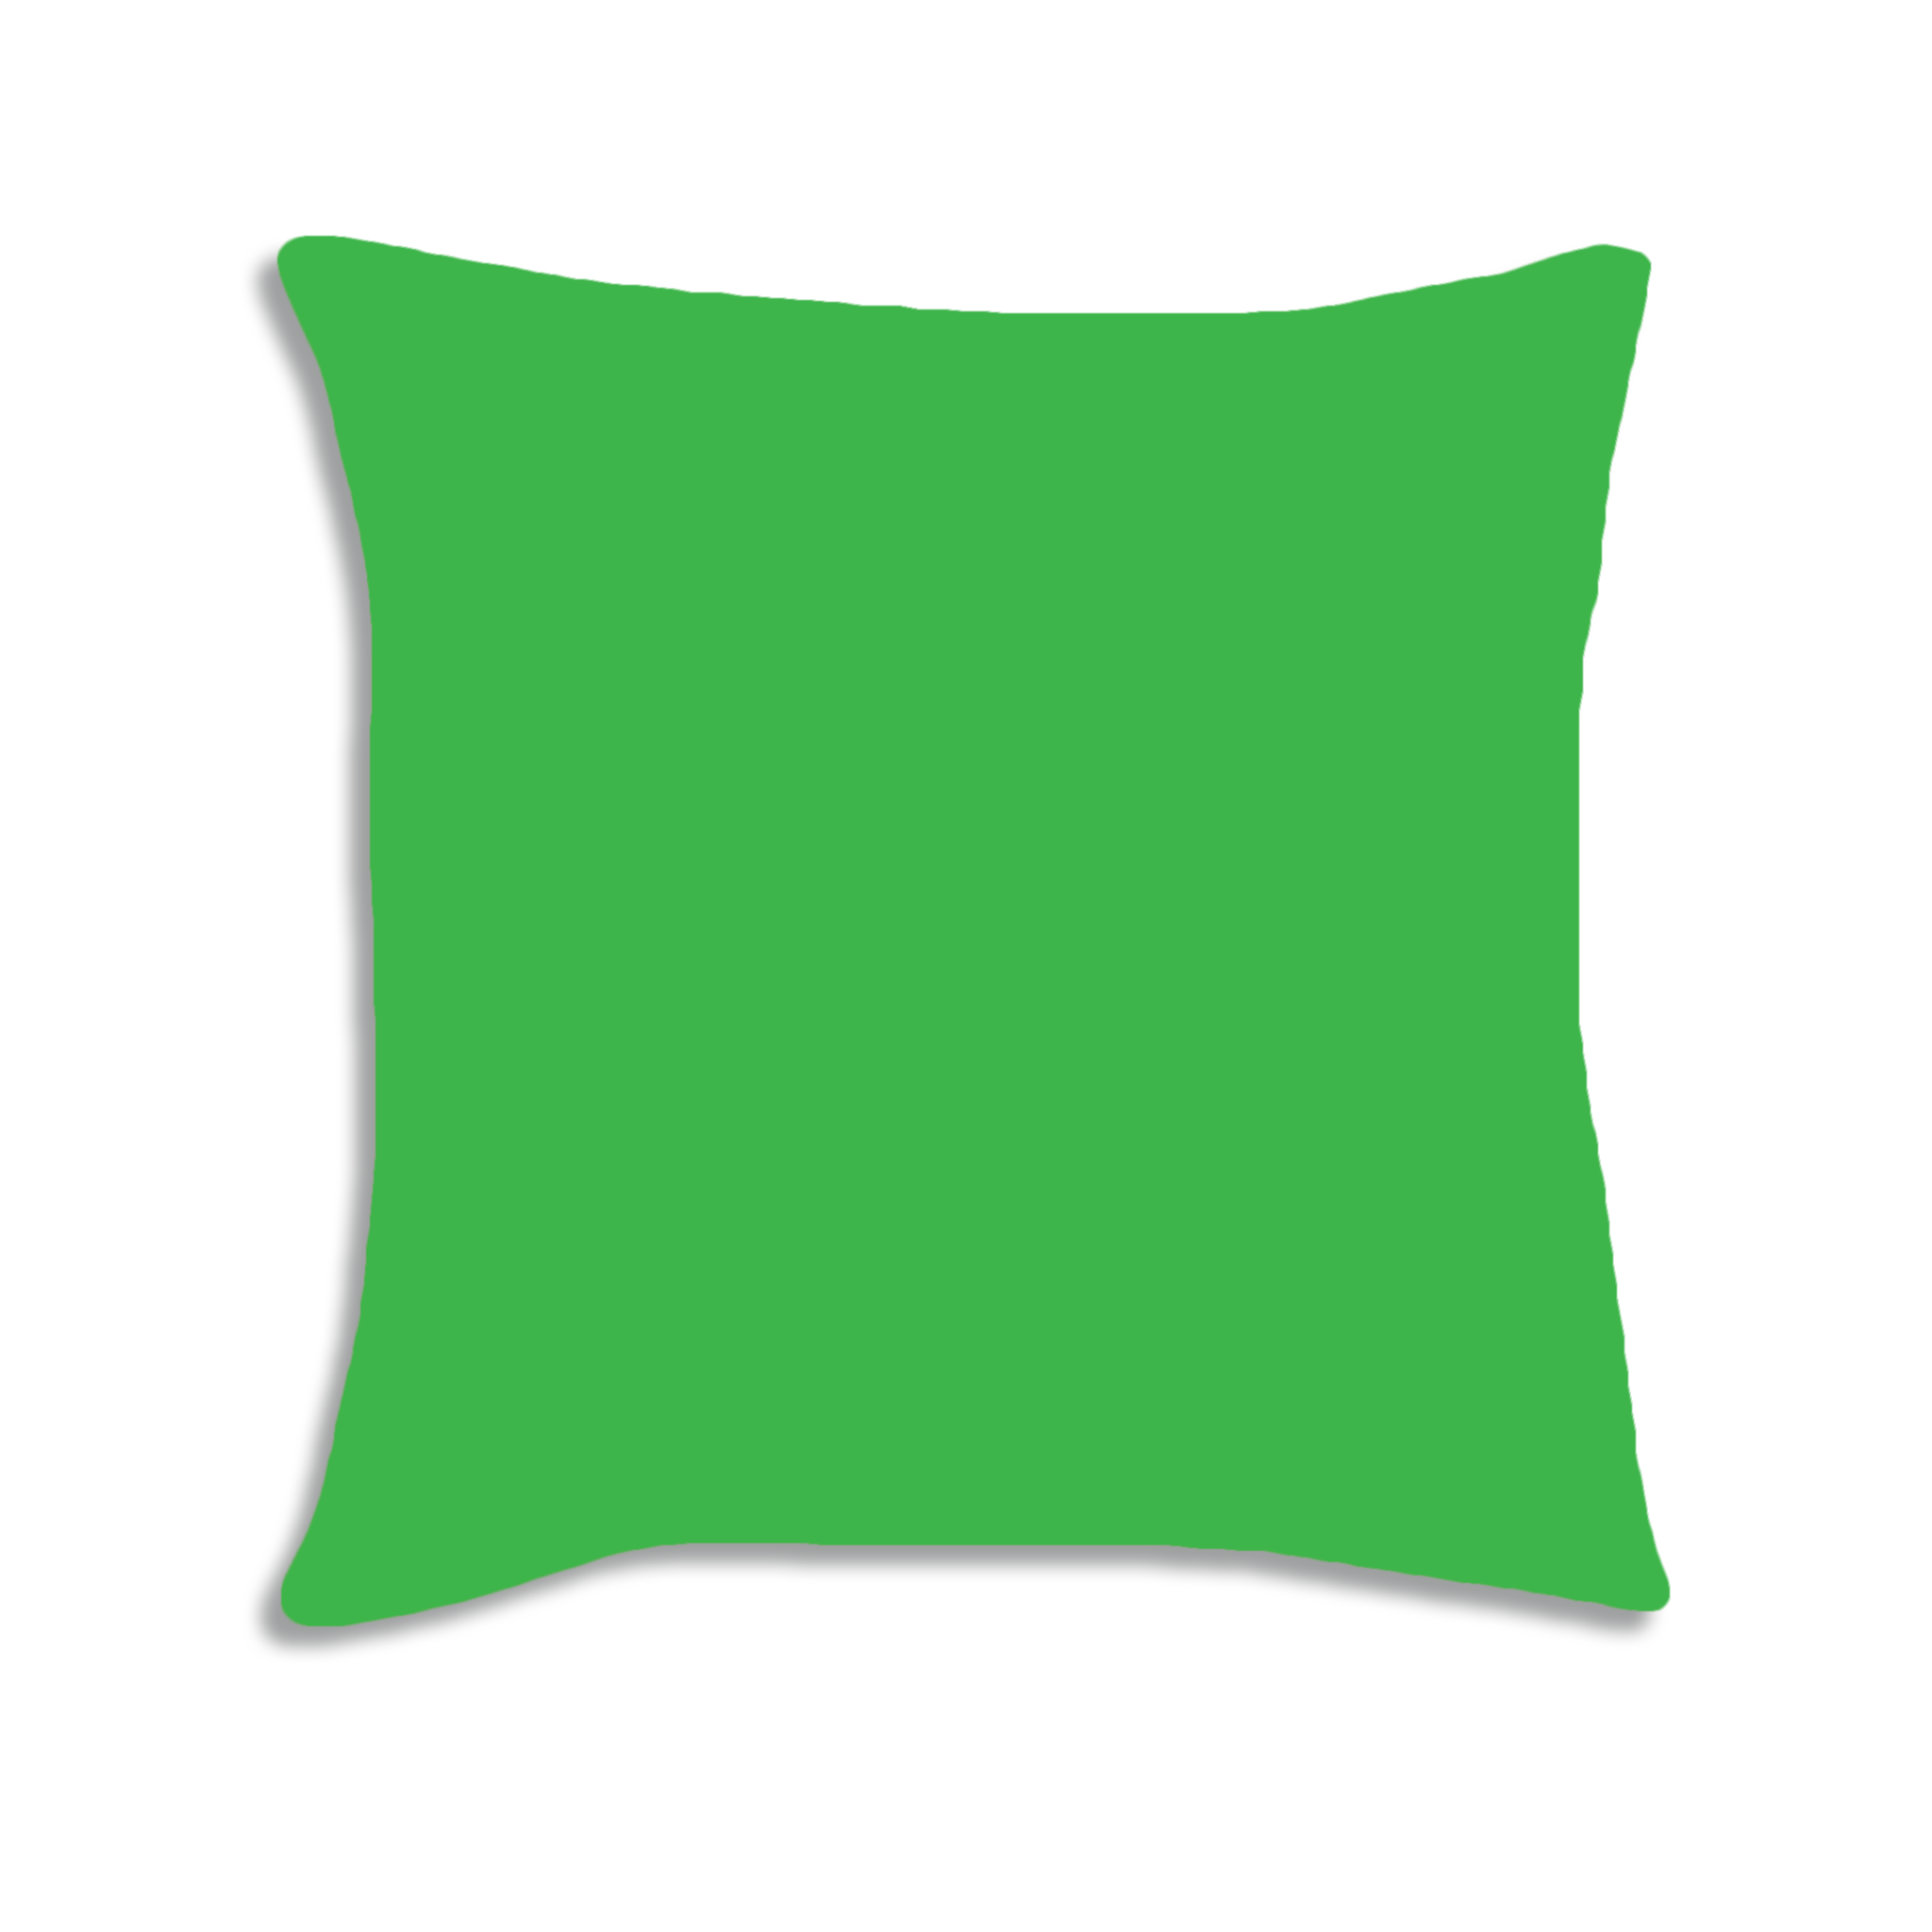 pillow clipart decorative pillow